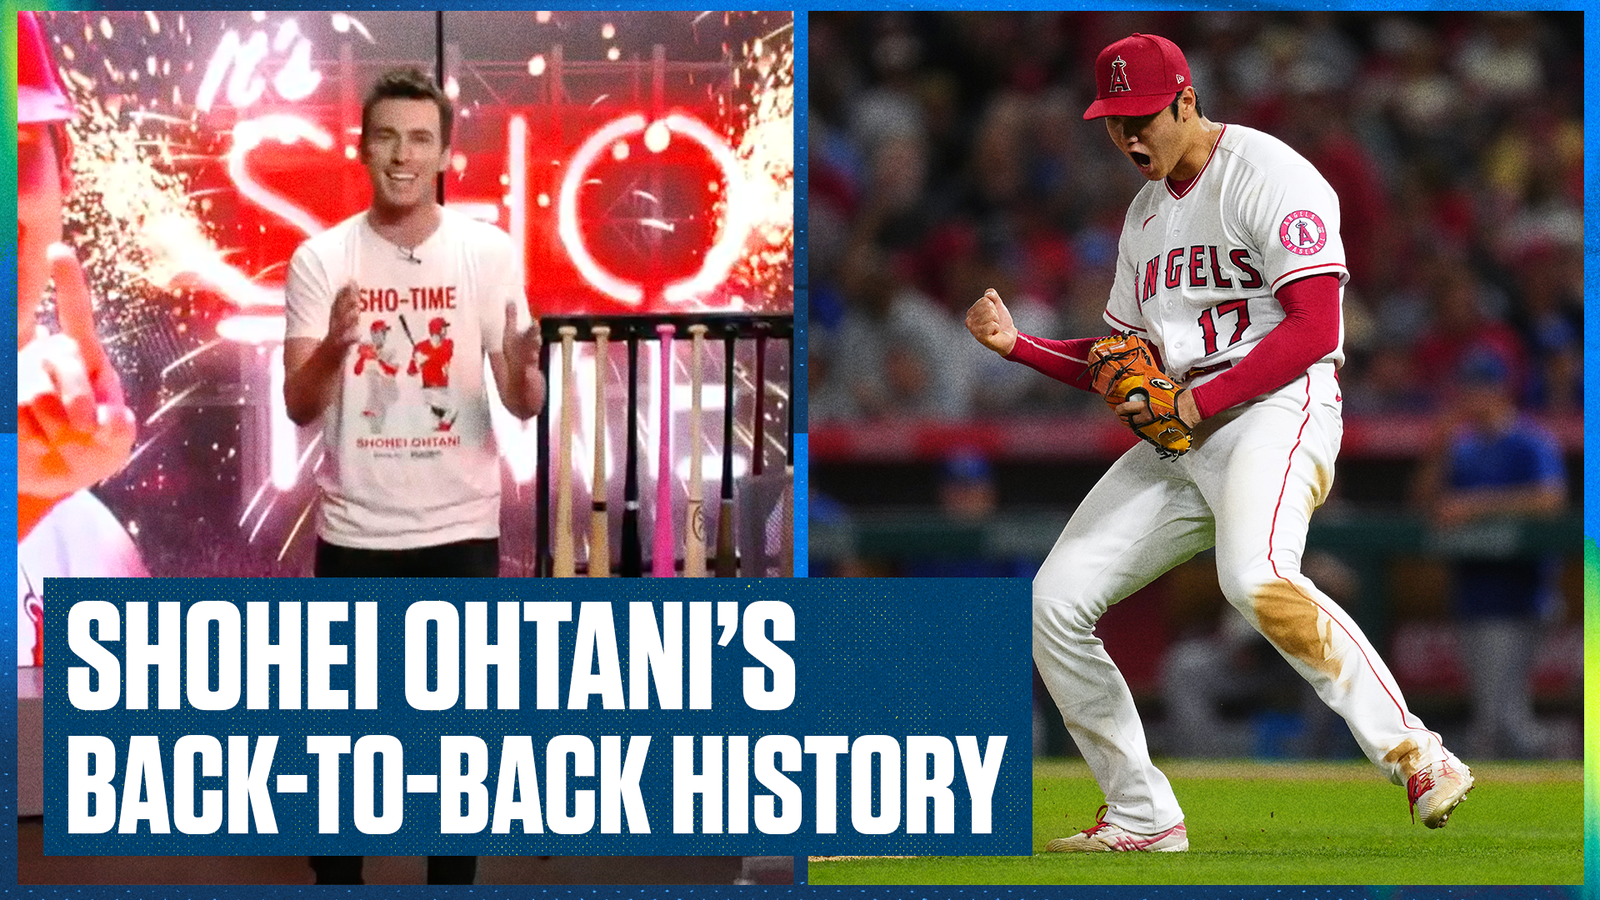 Reacting to Ohtani's back-to-back historic performances